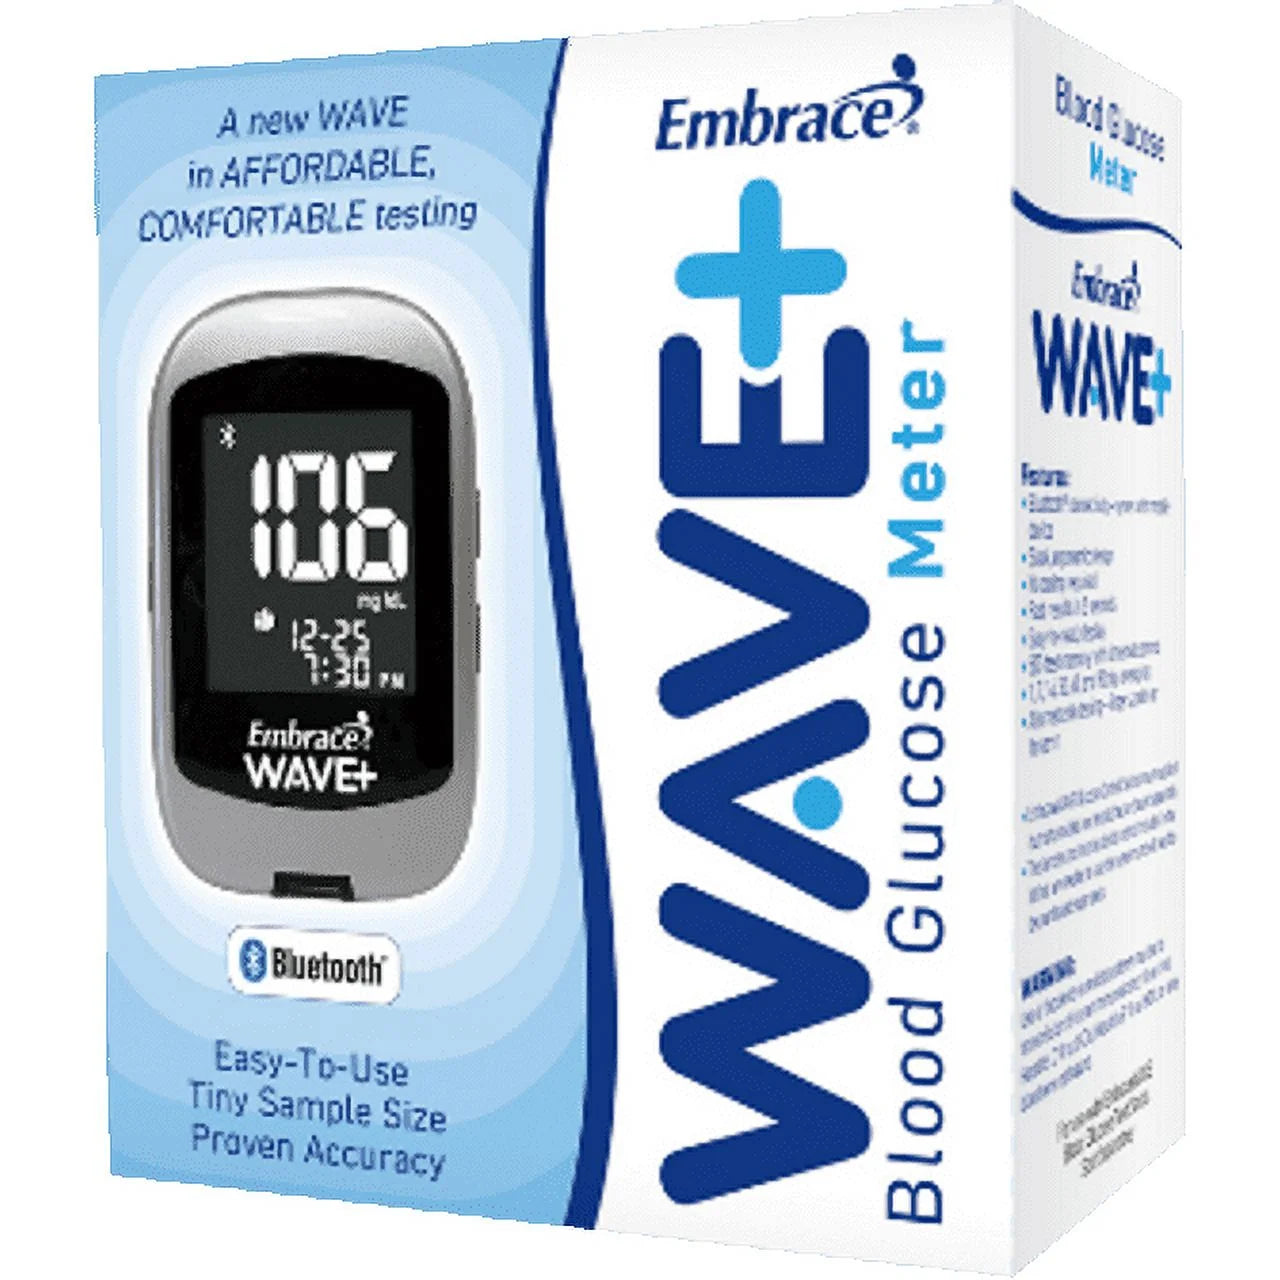 embrace wave Blood Glucose Monitoring System